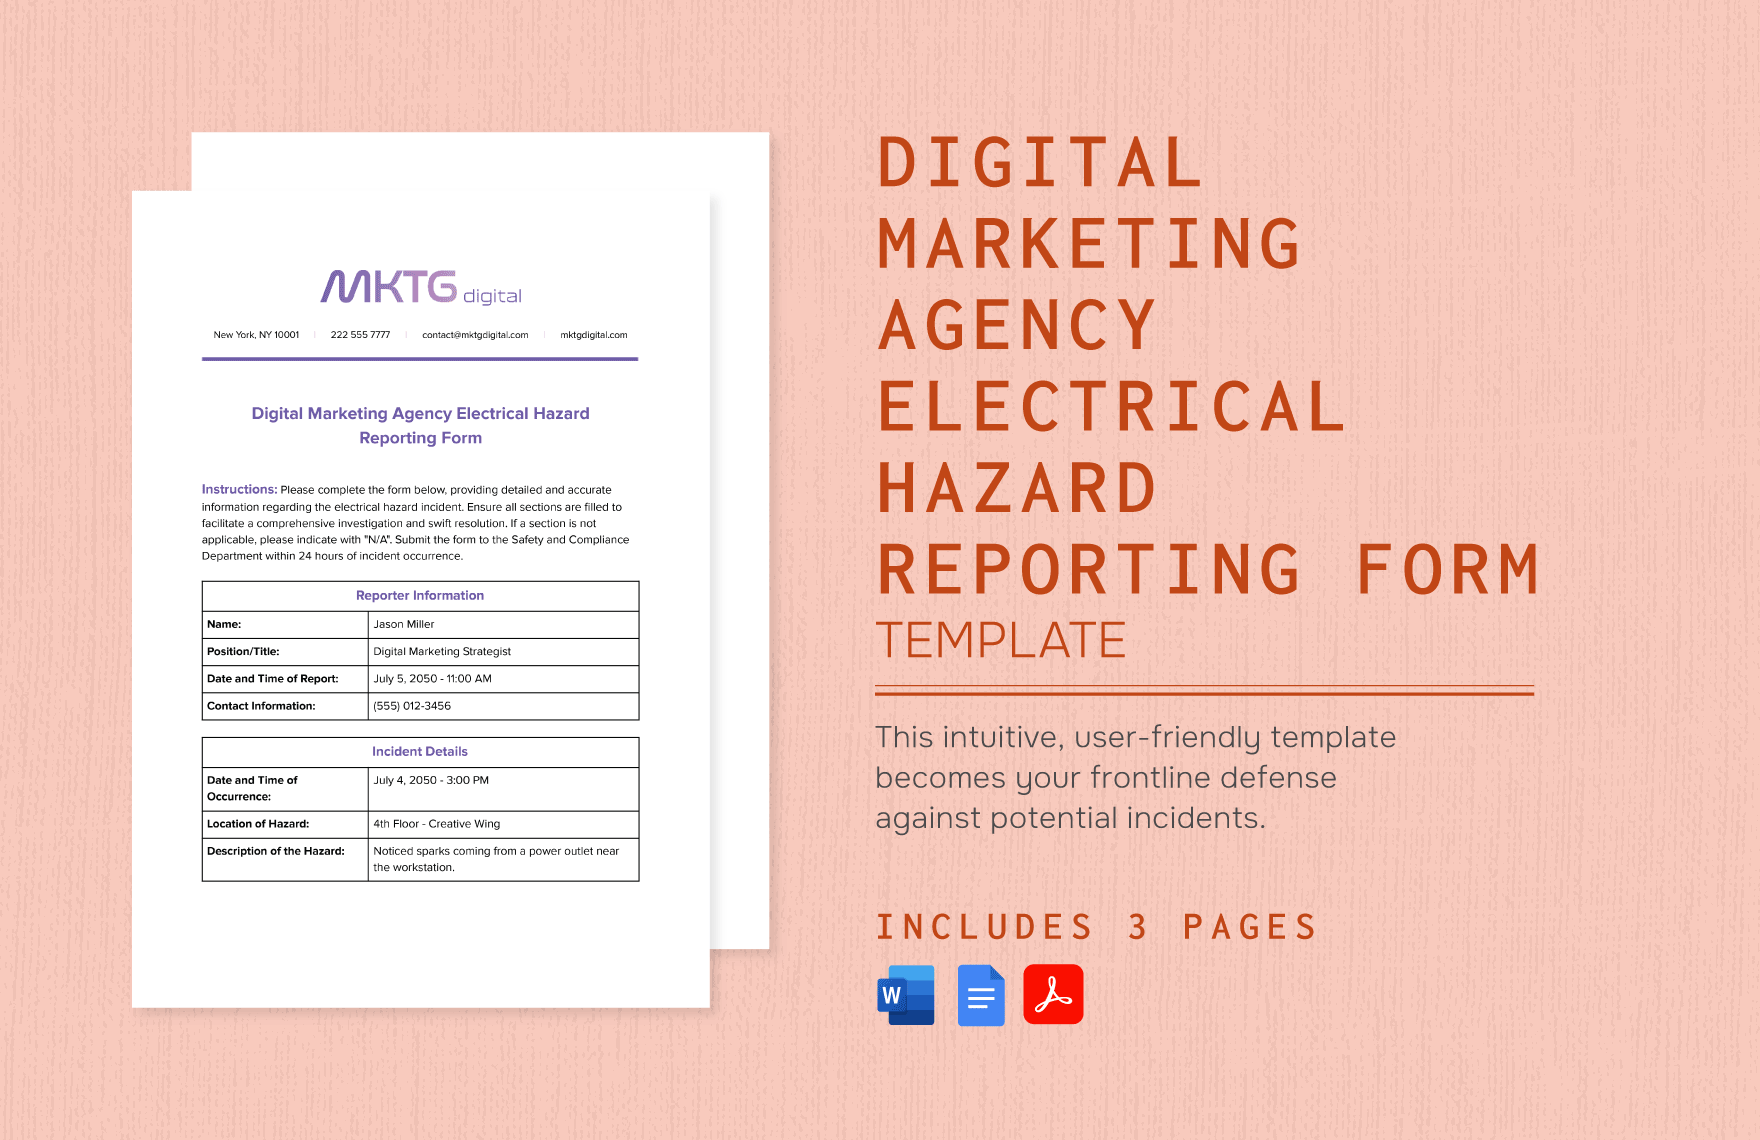 Digital Marketing Agency Electrical Hazard Reporting Form Template in Word, Google Docs, PDF